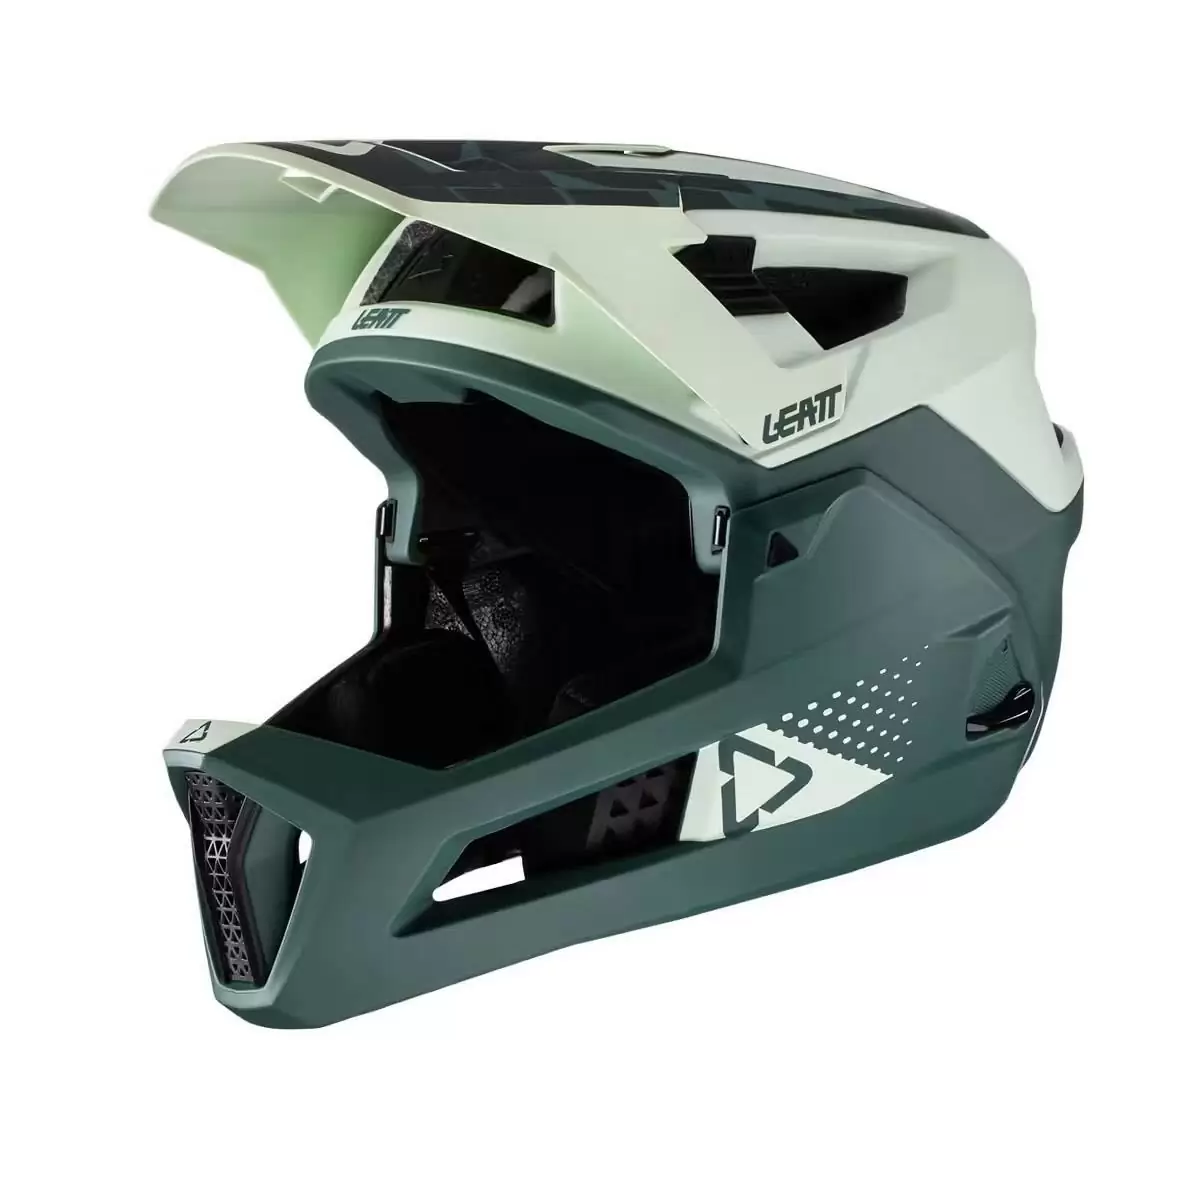 Mtb Helmet Enduro 4.0 removable chin green size M (55-59cm) - image